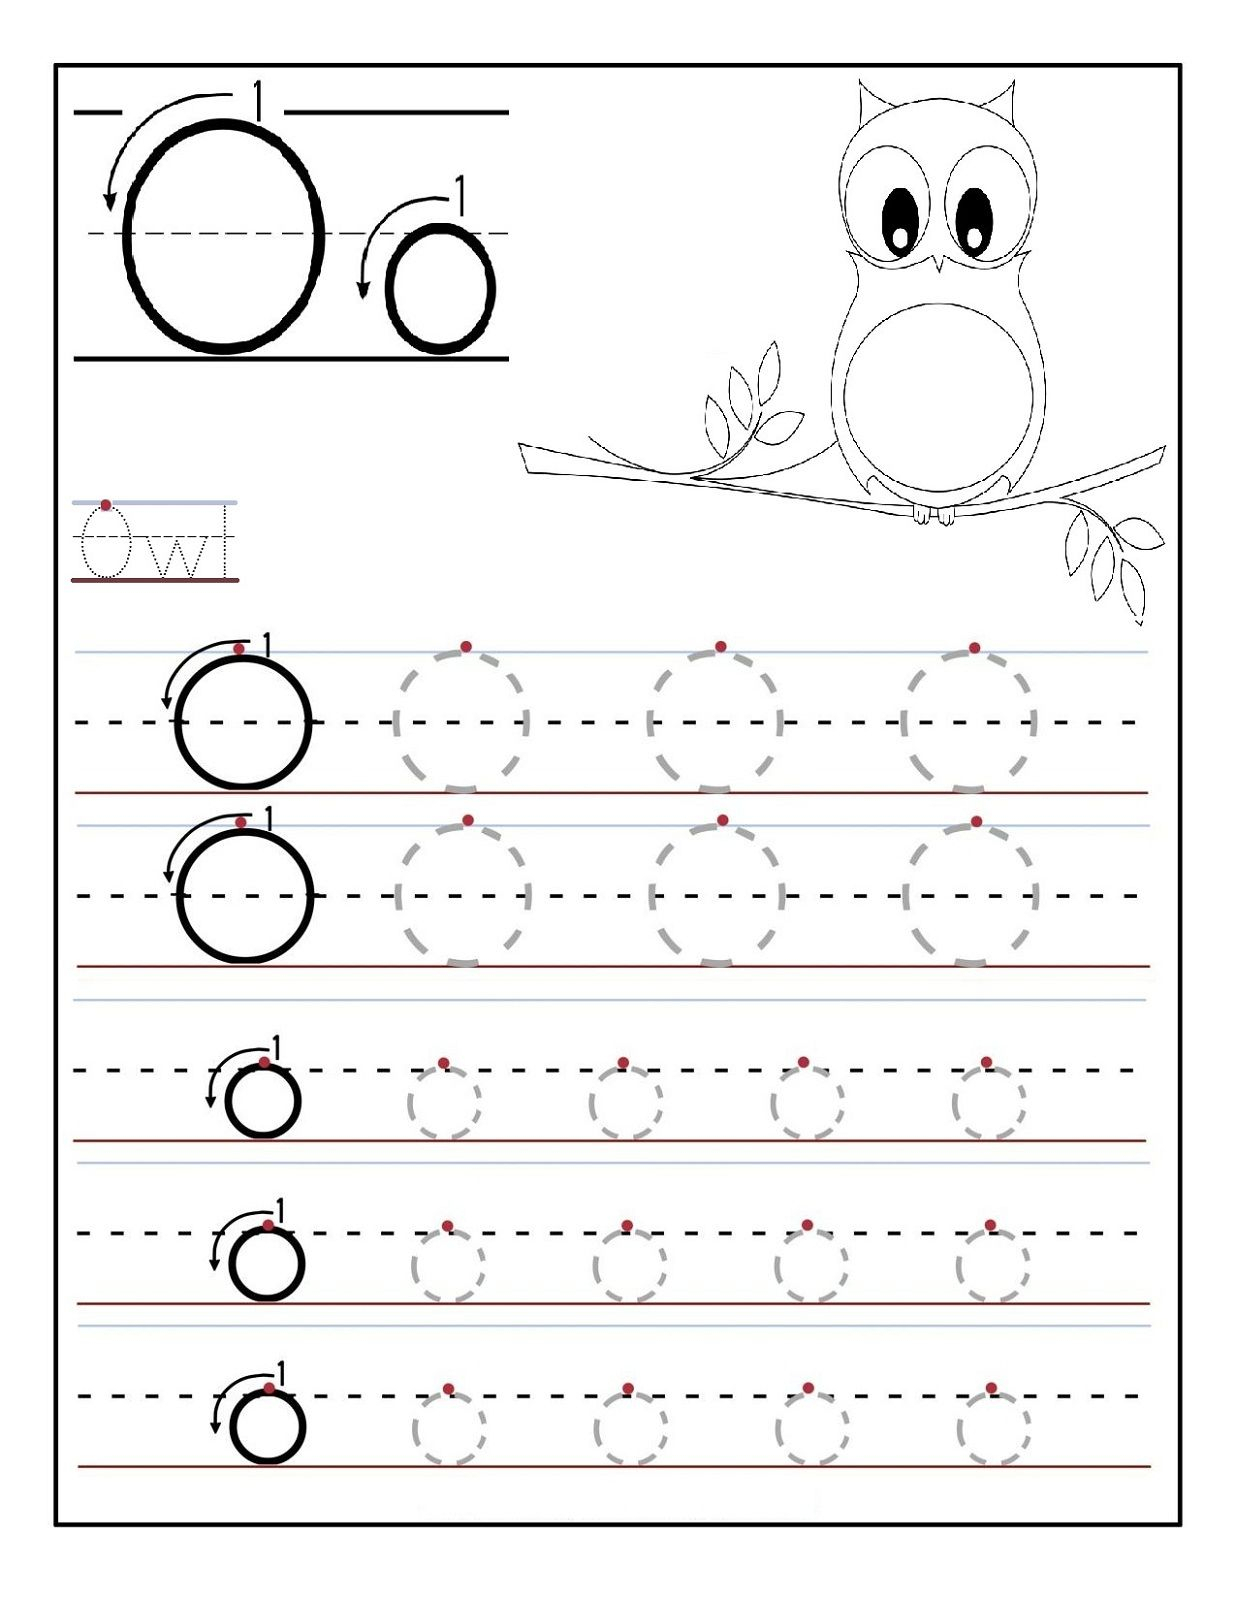 Letter O Worksheet Free | Letter O Worksheets, Tracing within Letter O Worksheets For Toddlers